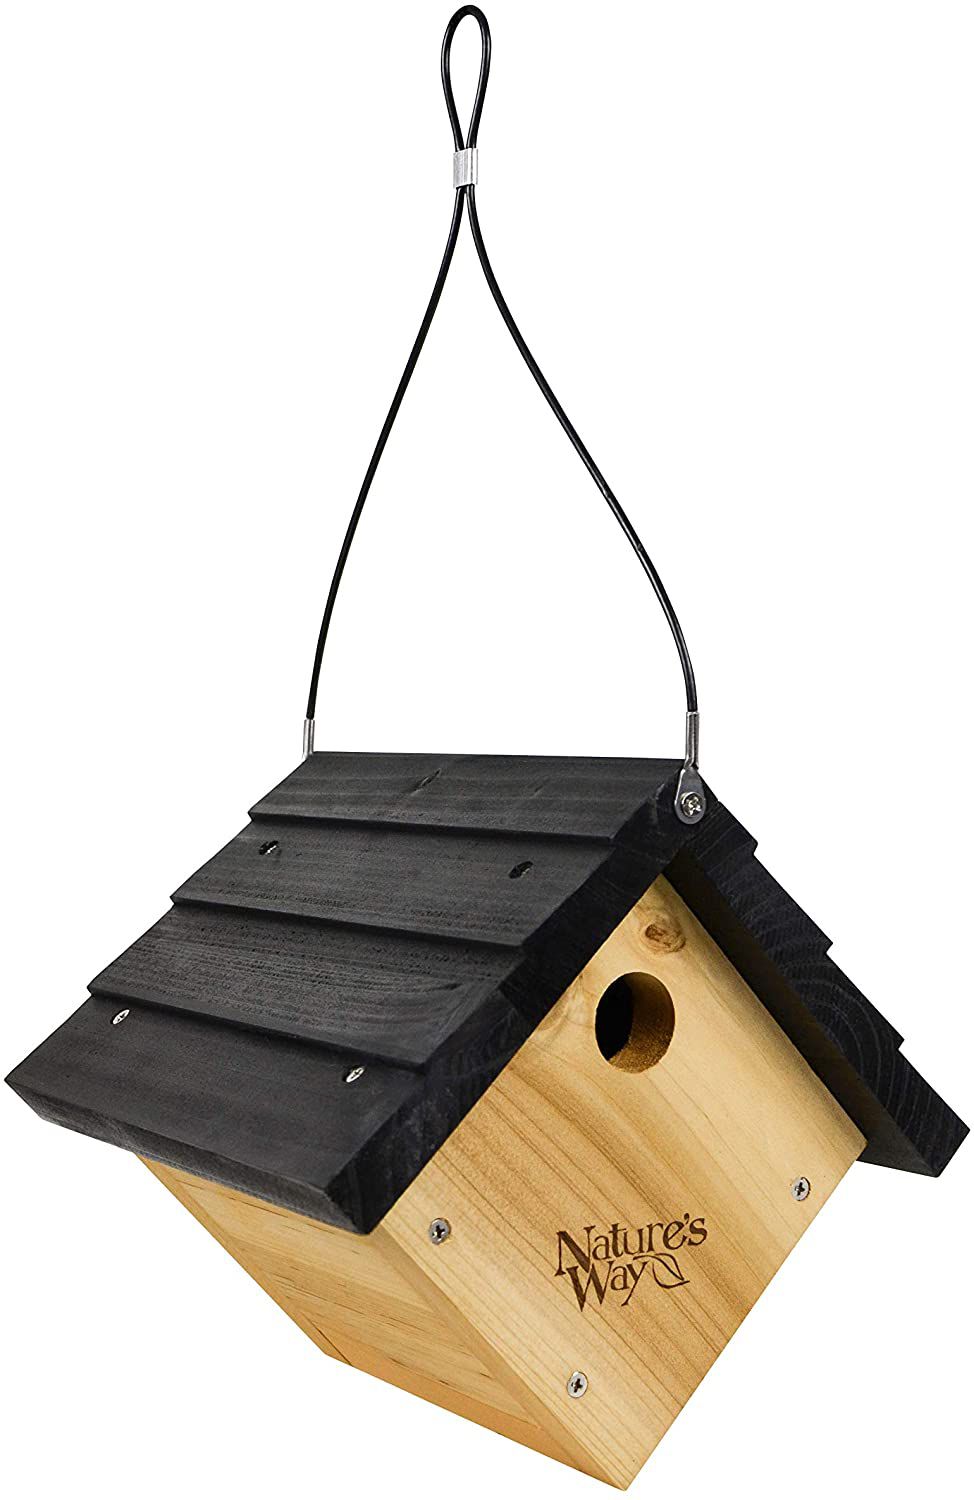 Hanging Bird house